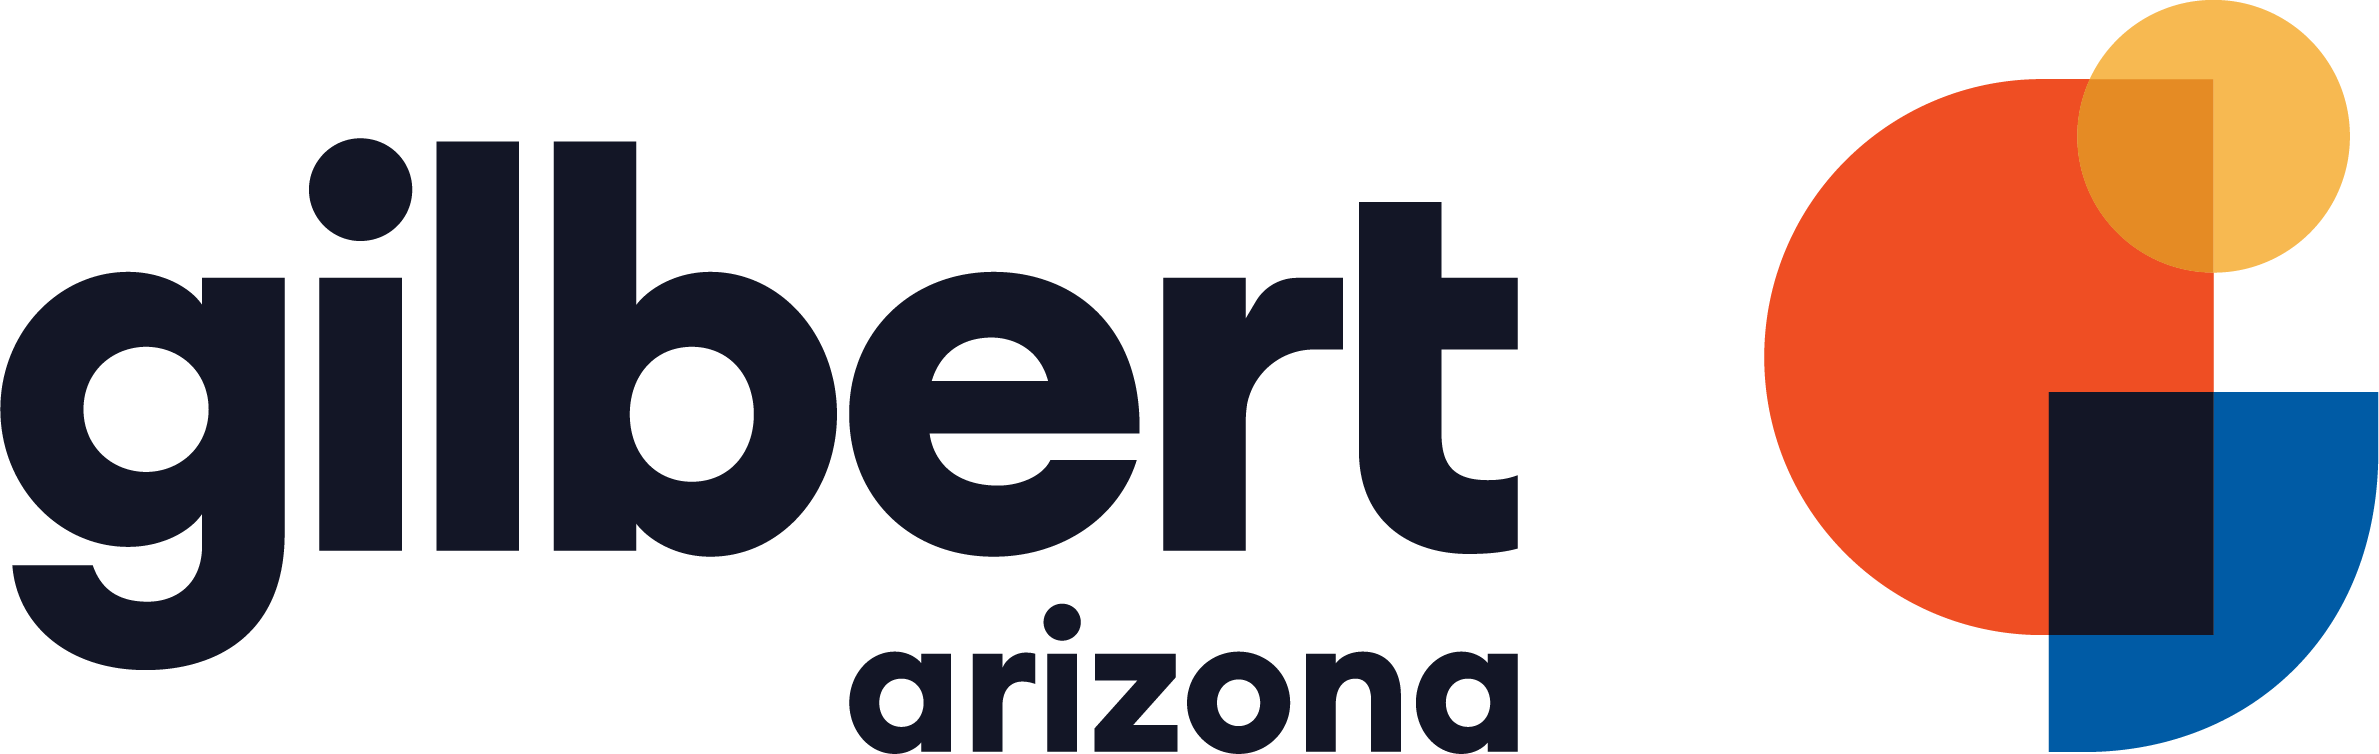 Arizona Game & Fish logo